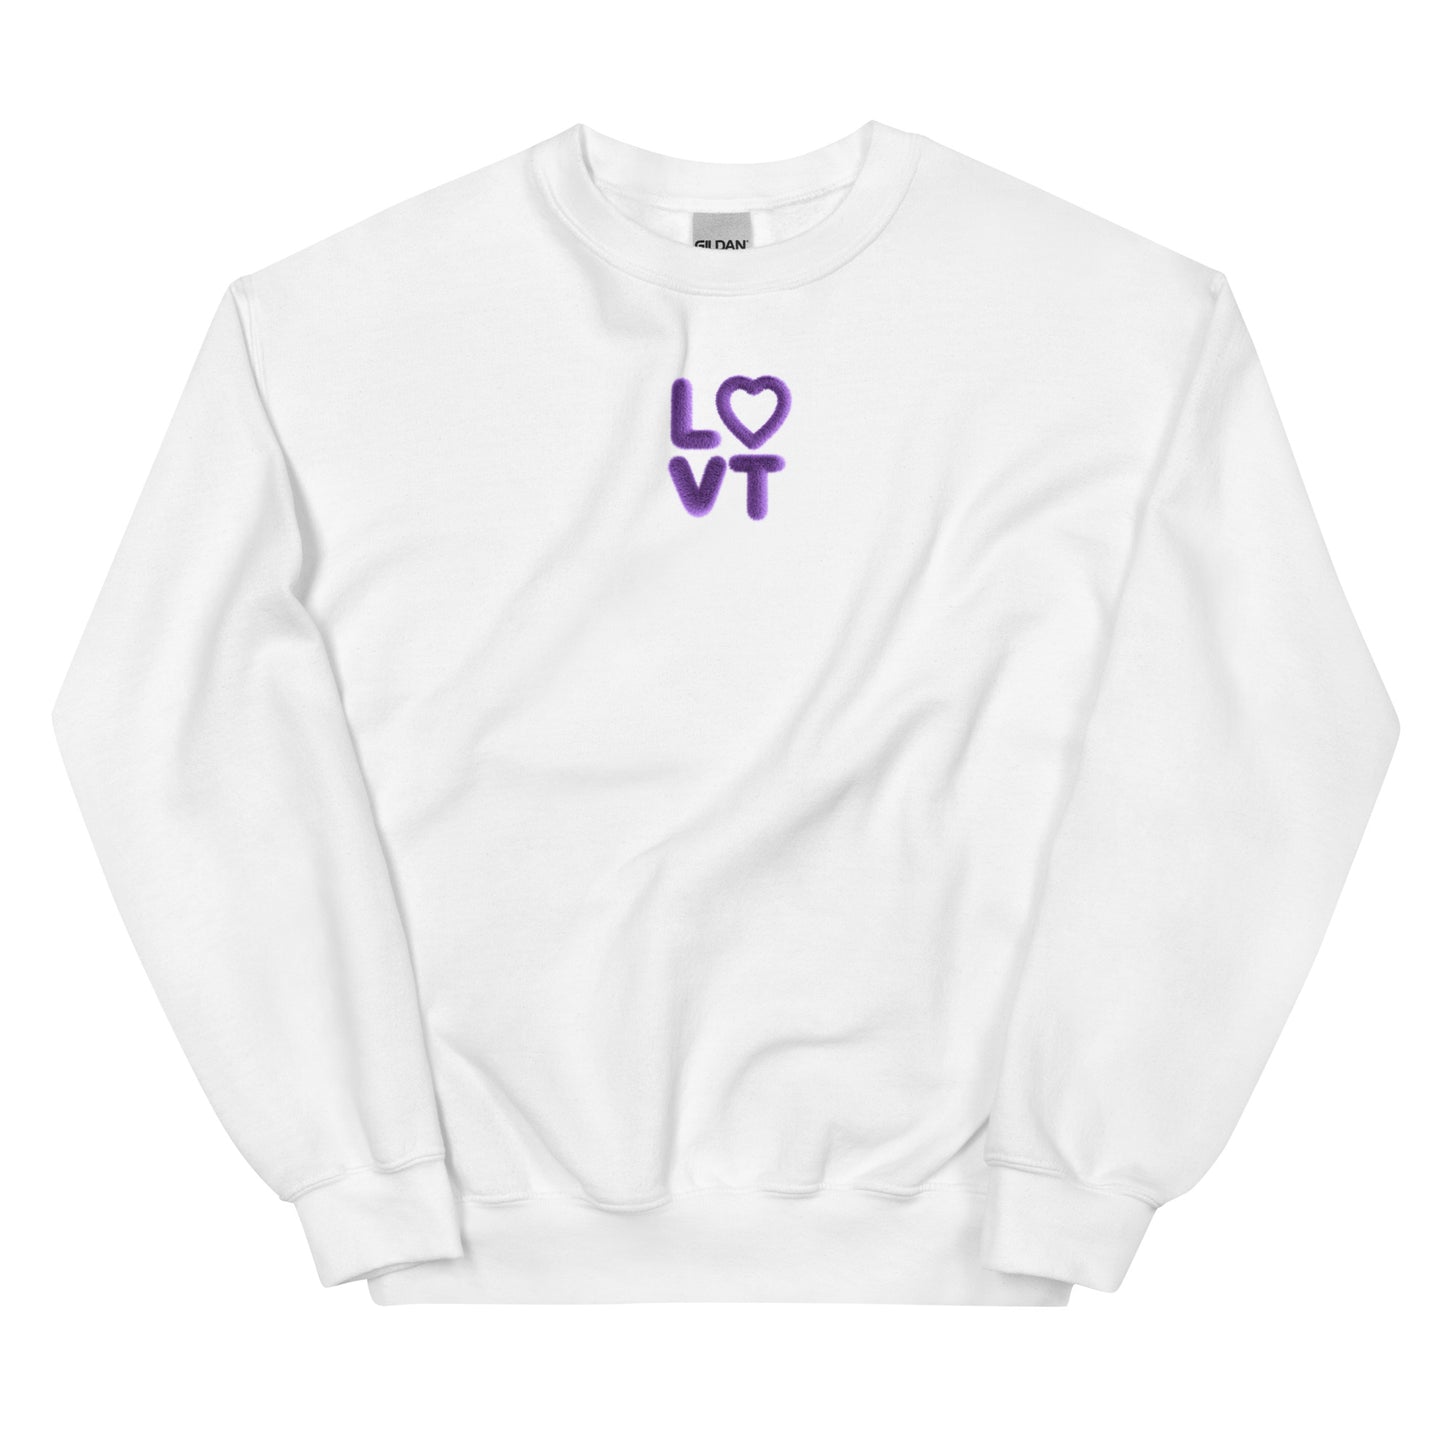 Love LVT Sweatshirt